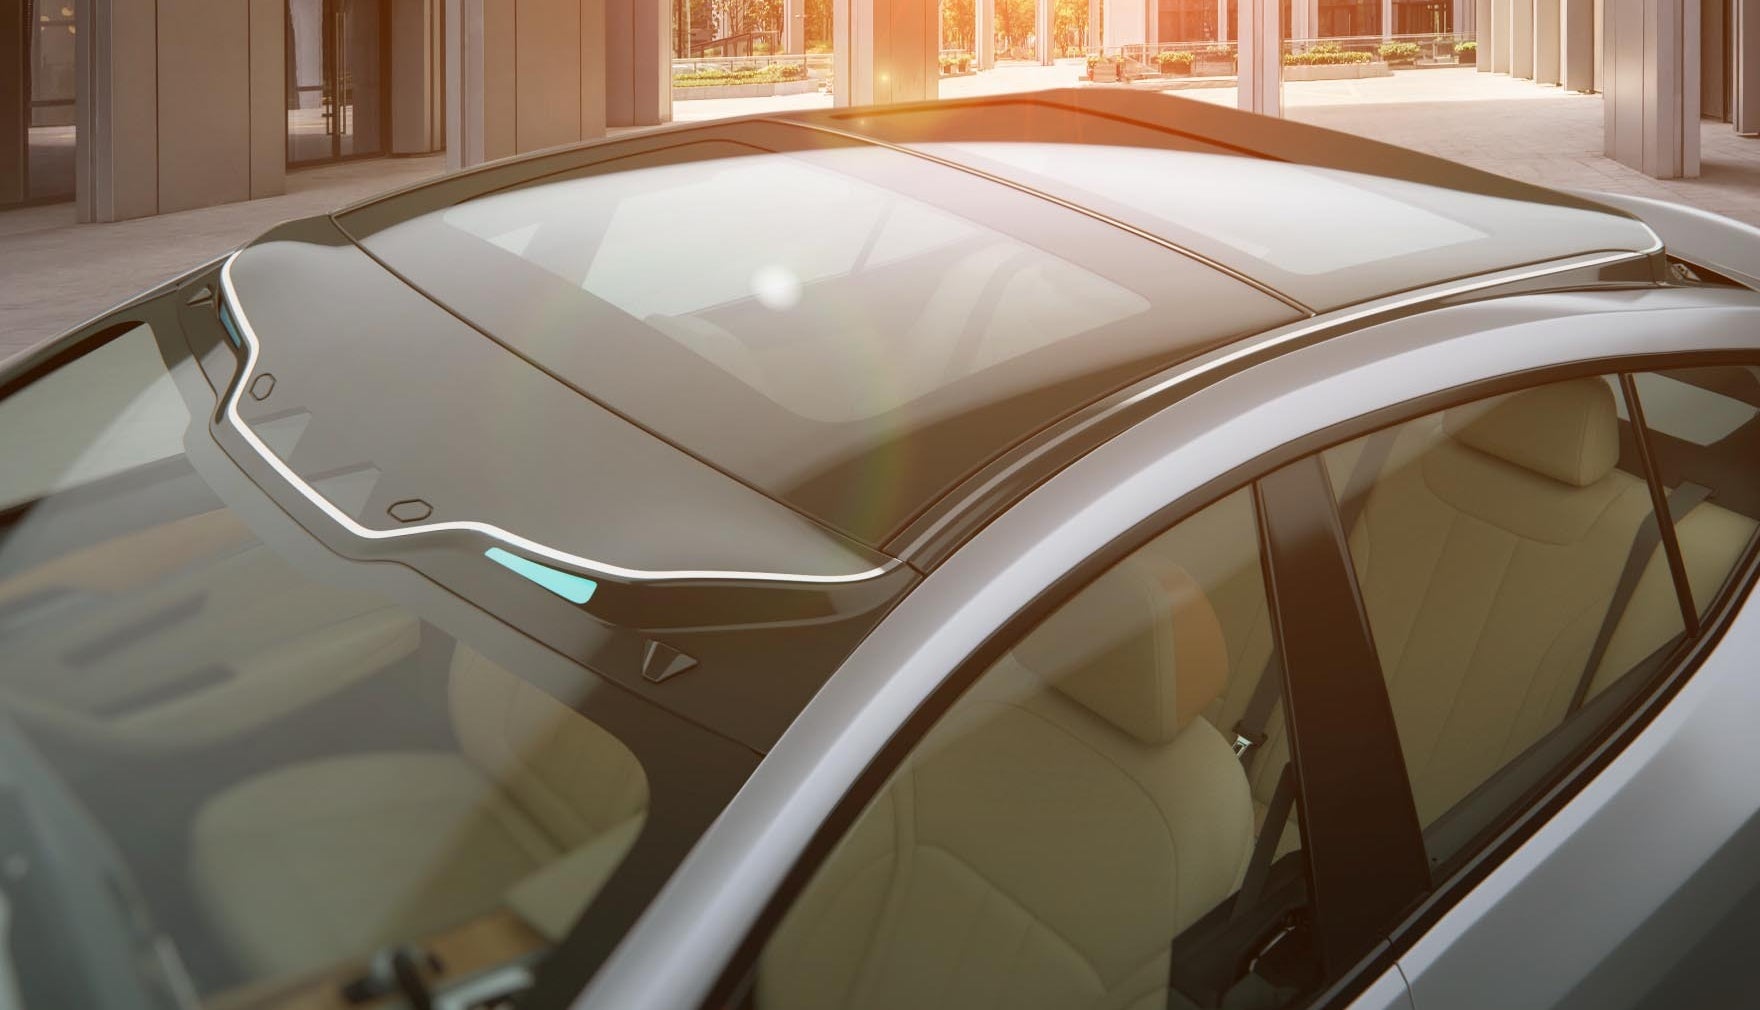 Webasto Autonomous driving - Smart solutions for driverless driving